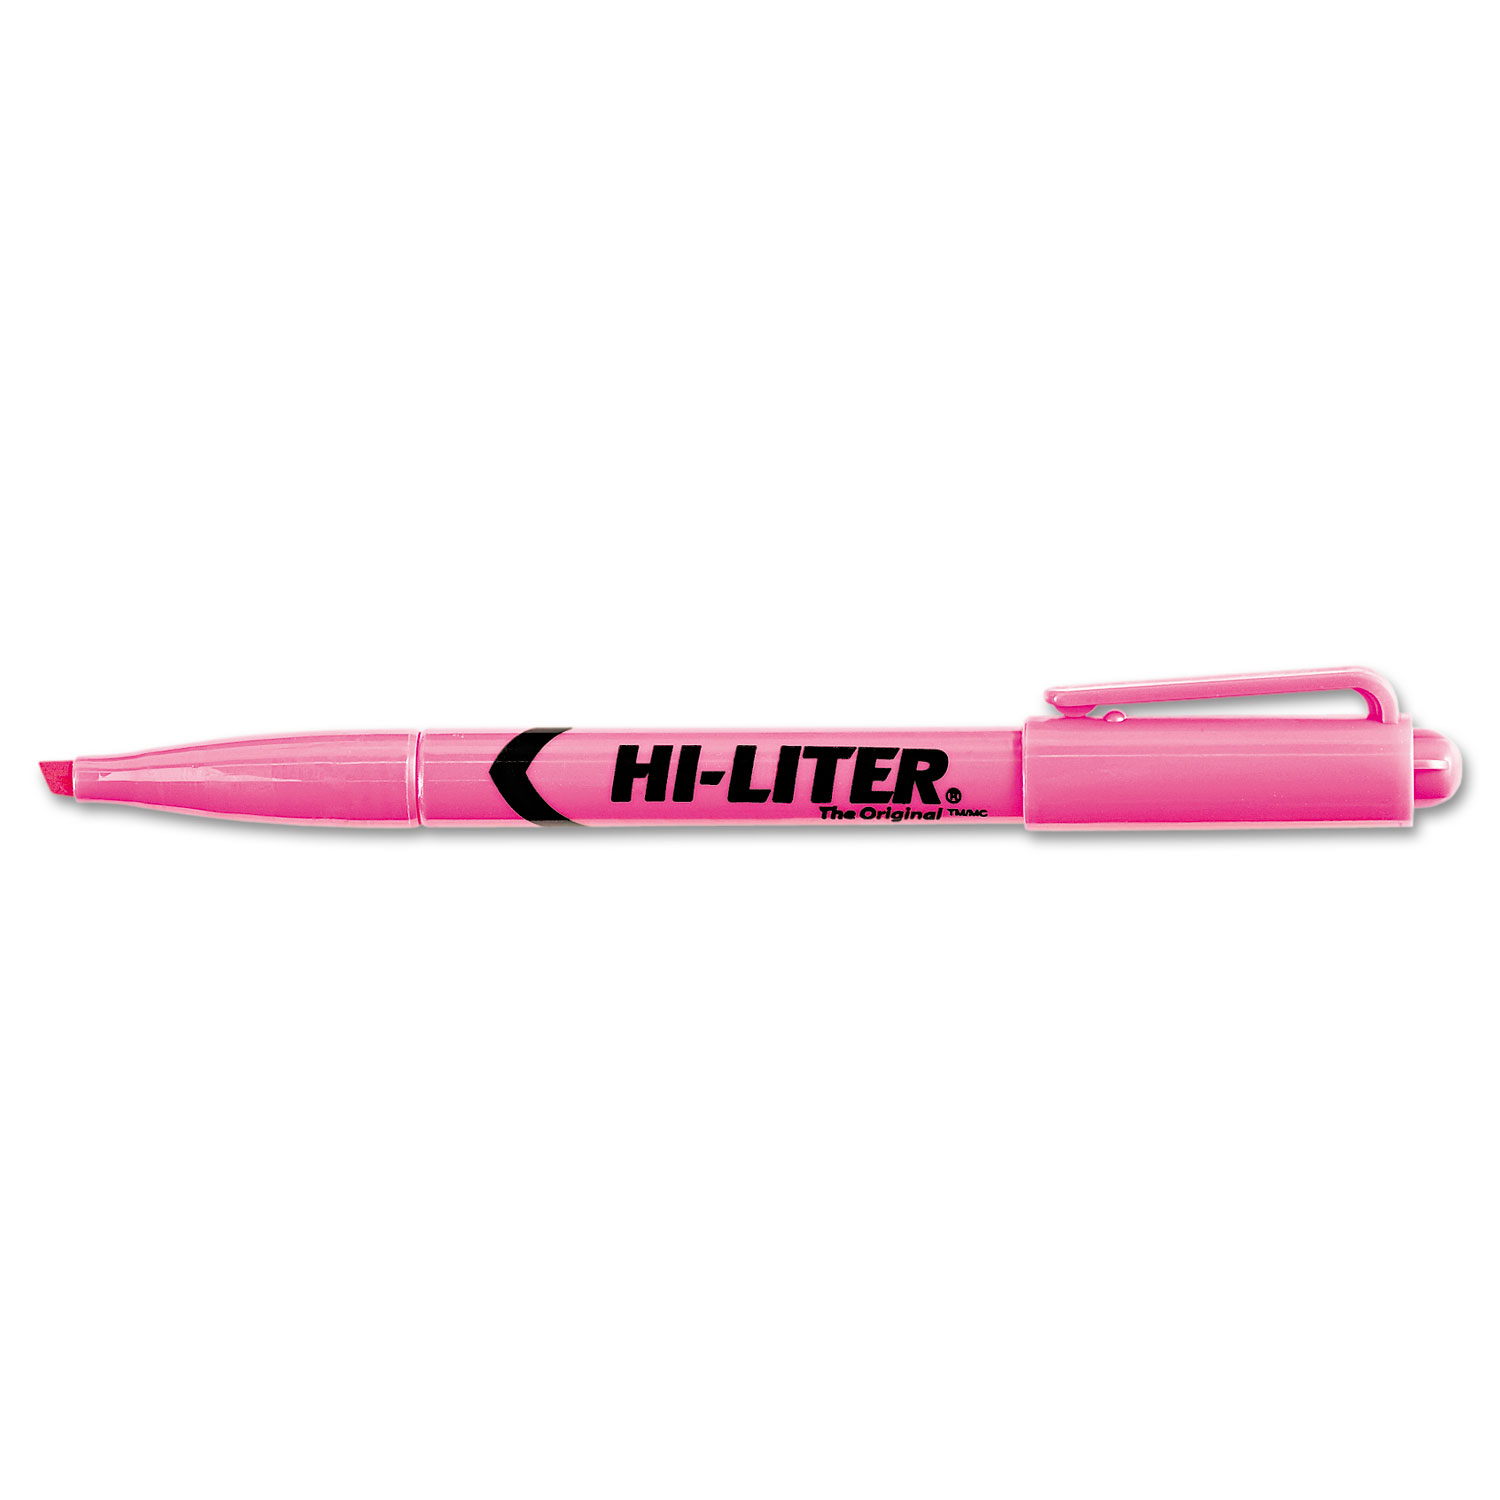 HI-LITER AVE23592 Avery  Pen-Style Highlighter, Chisel Tip, Fluorescent Pink Ink, Dozen